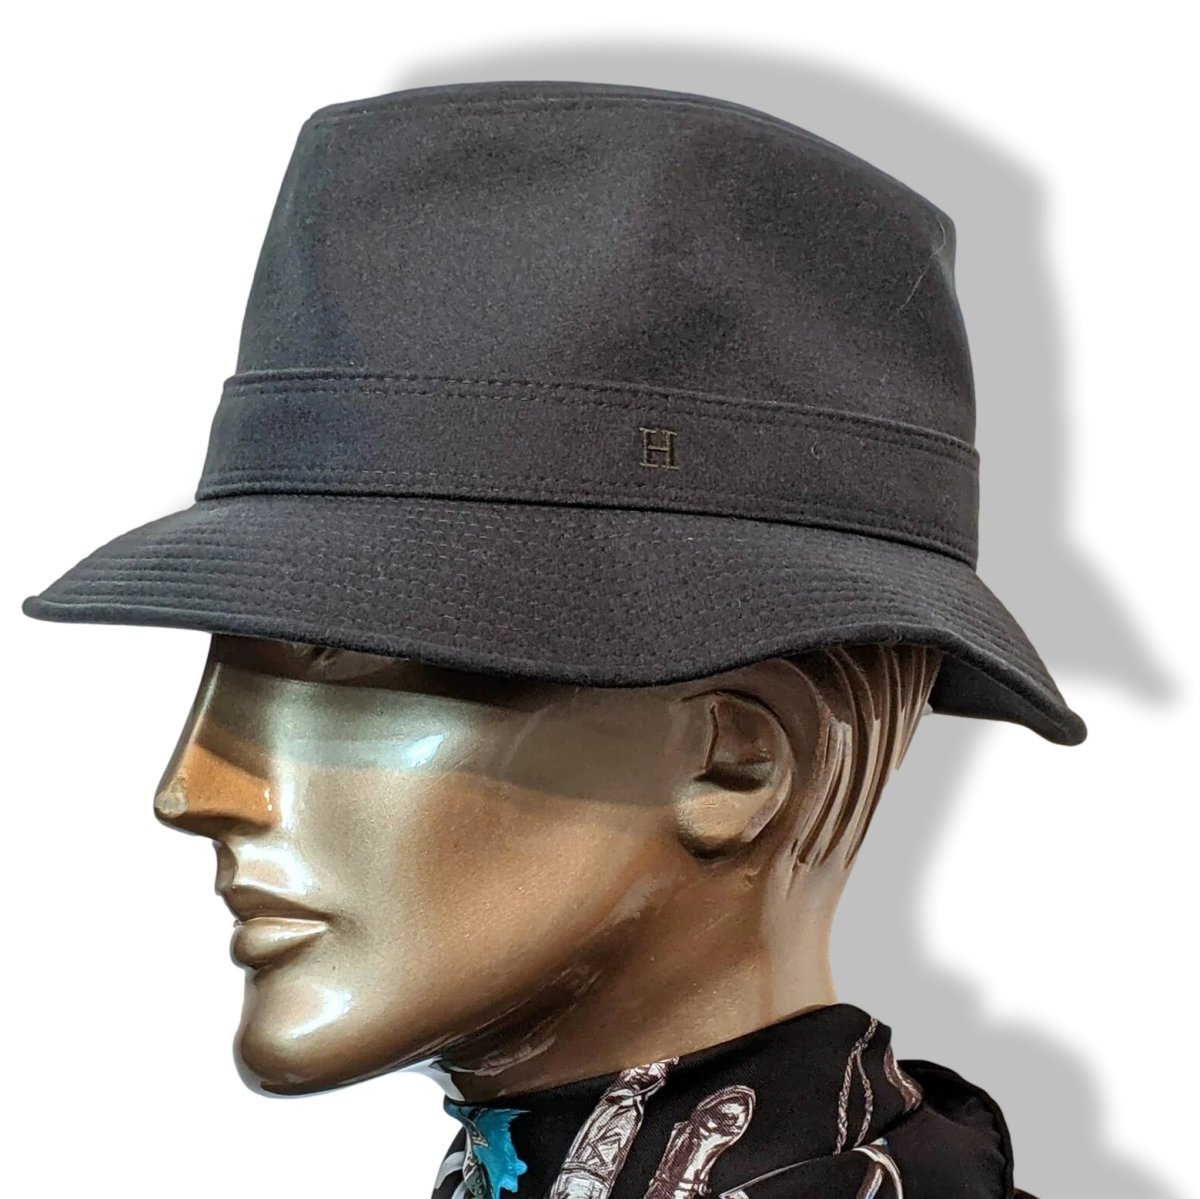 Hermes Men's Leon Cashmere Hat